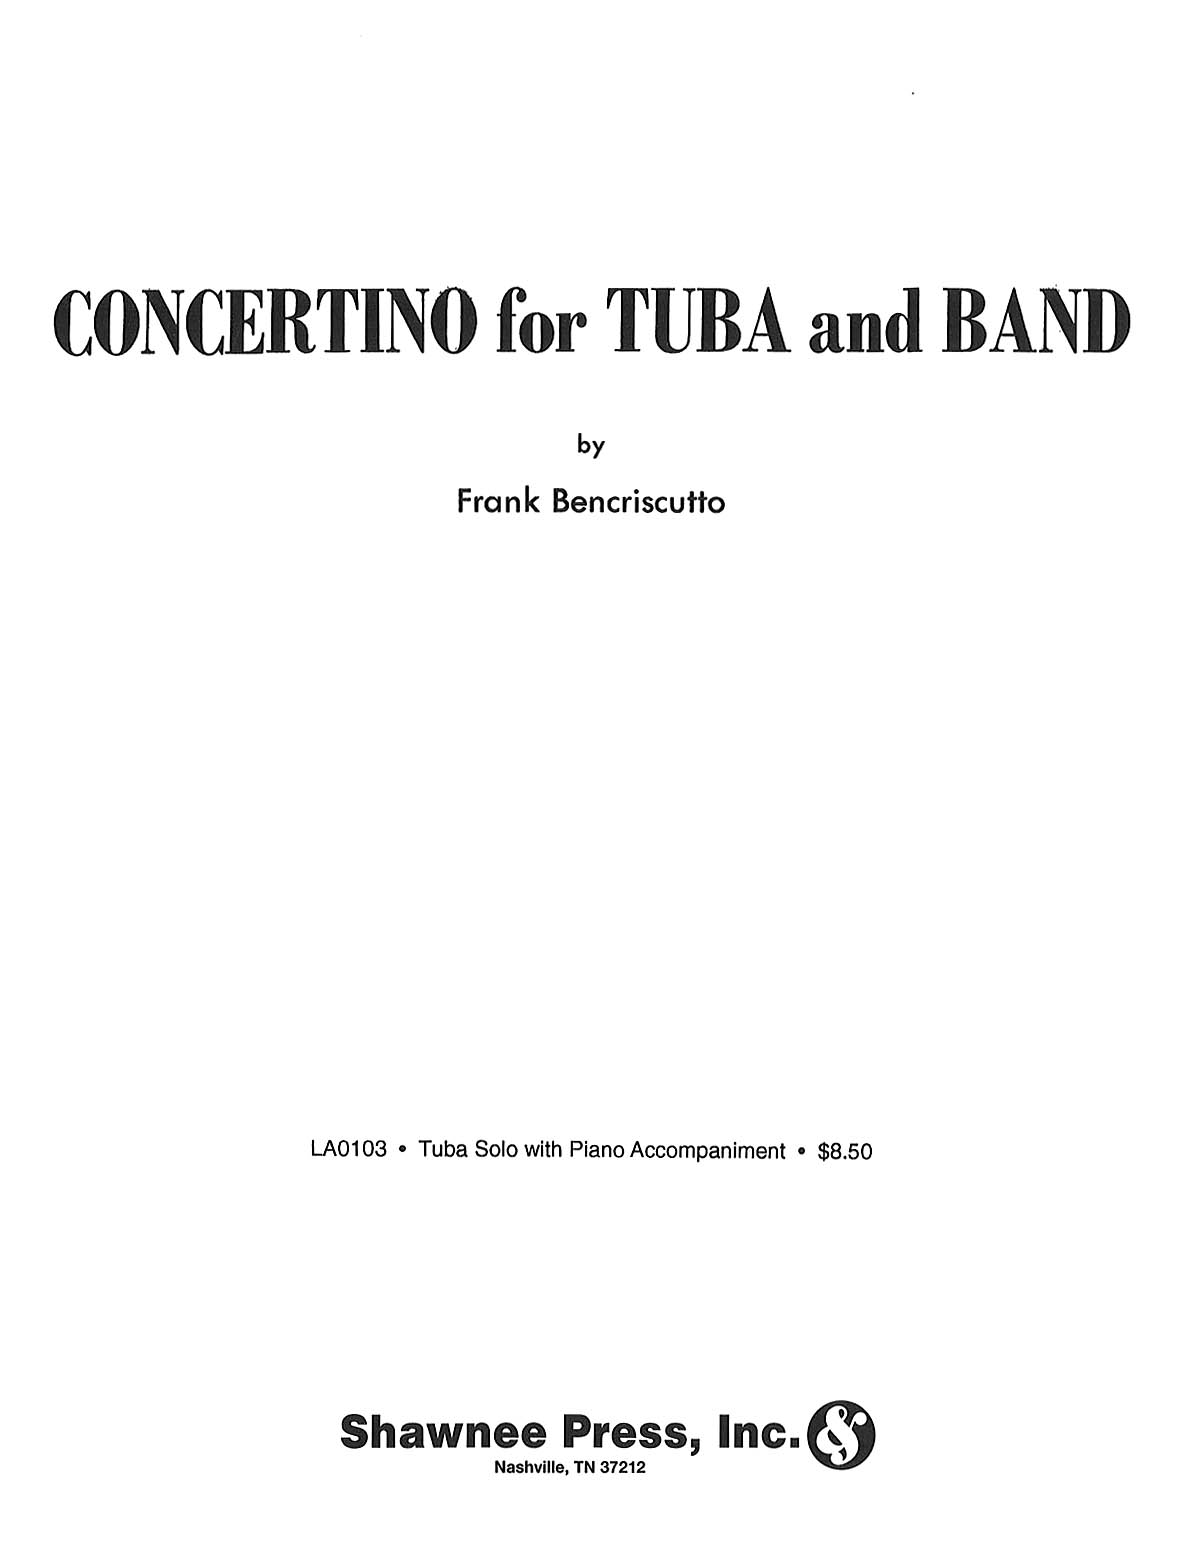 Frank Bencriscutto: Concertino For Tuba And Band (Piano Reduction) Tuba/Piano